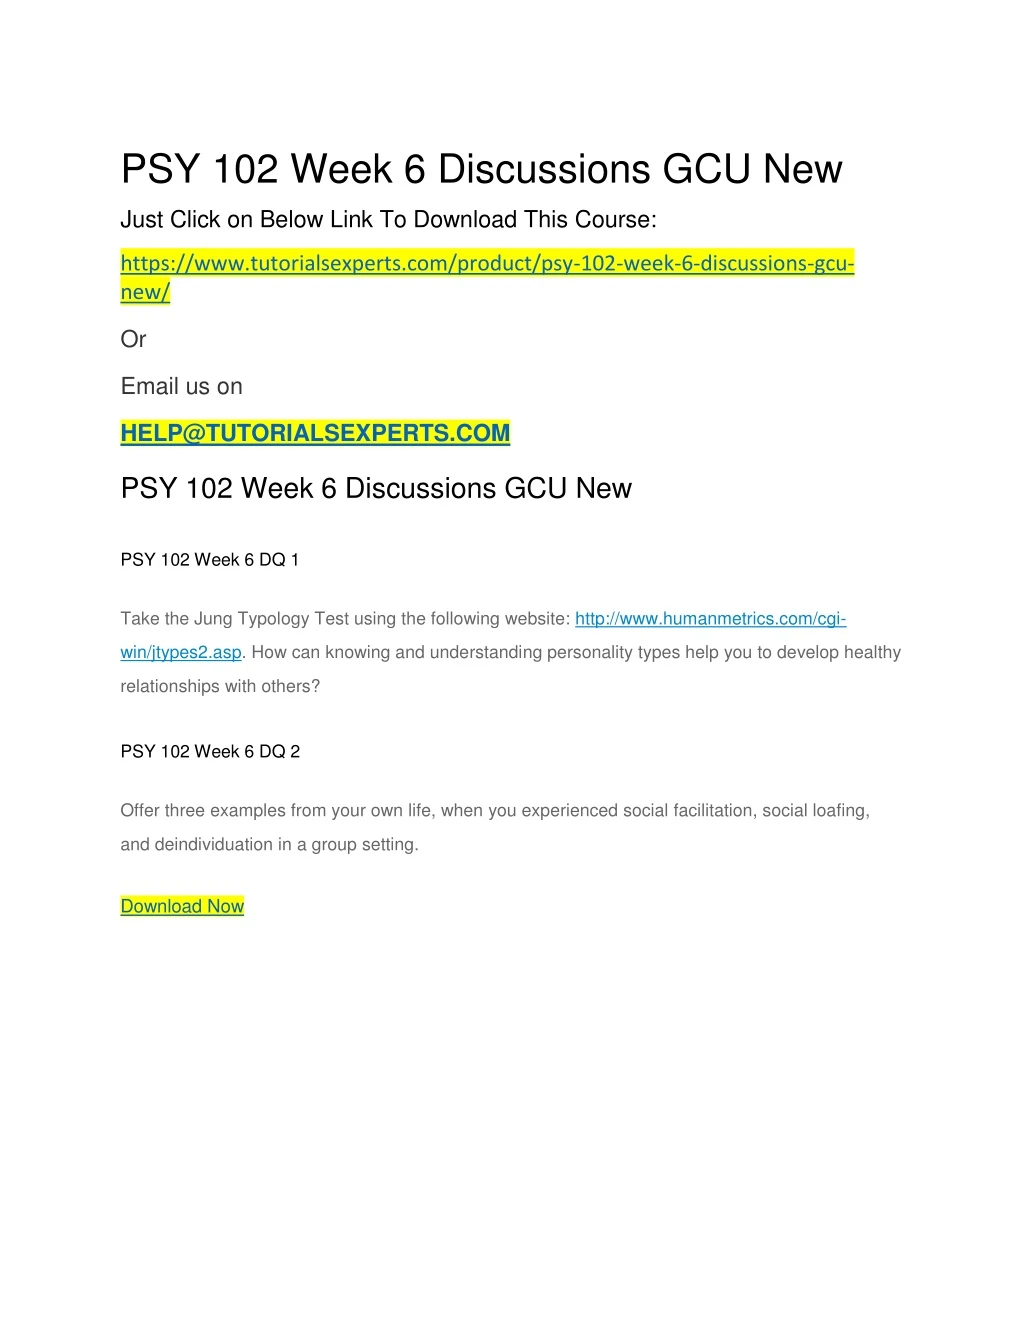 psy 102 week 6 discussions gcu new